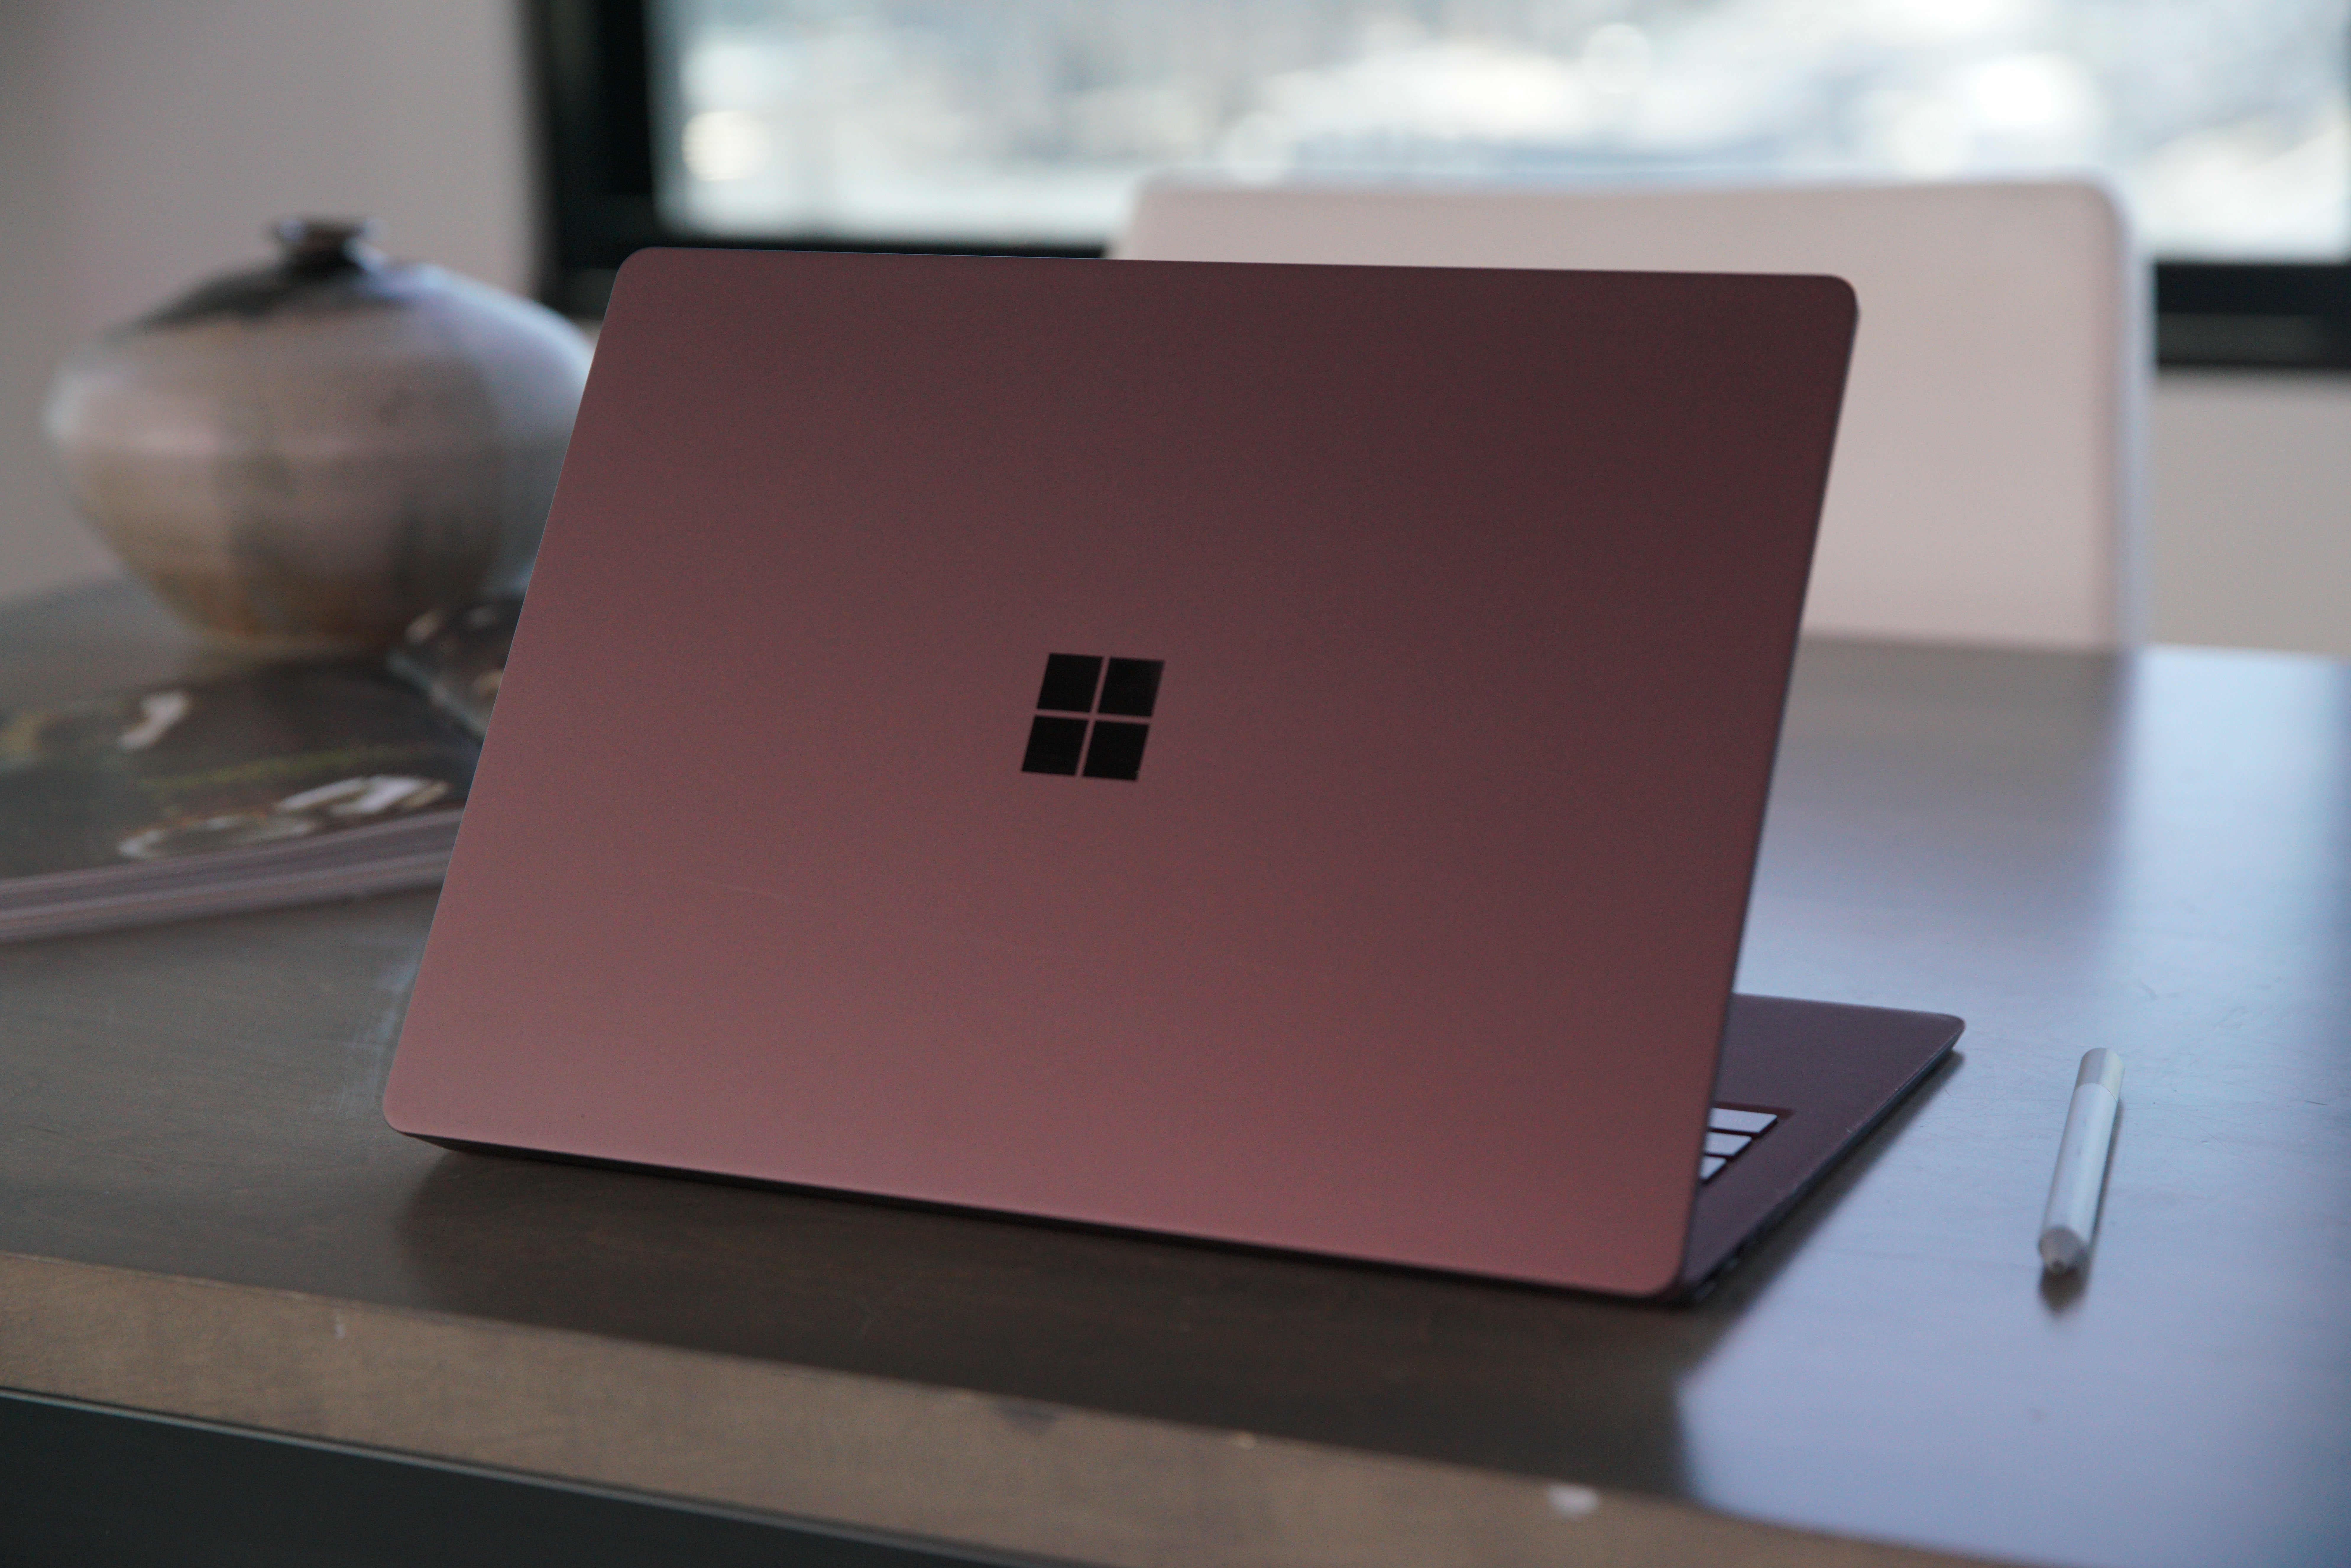 Microsoft Surface Laptop Intel Core i7 8GB 256GB Windows 10 Burgundy Color 